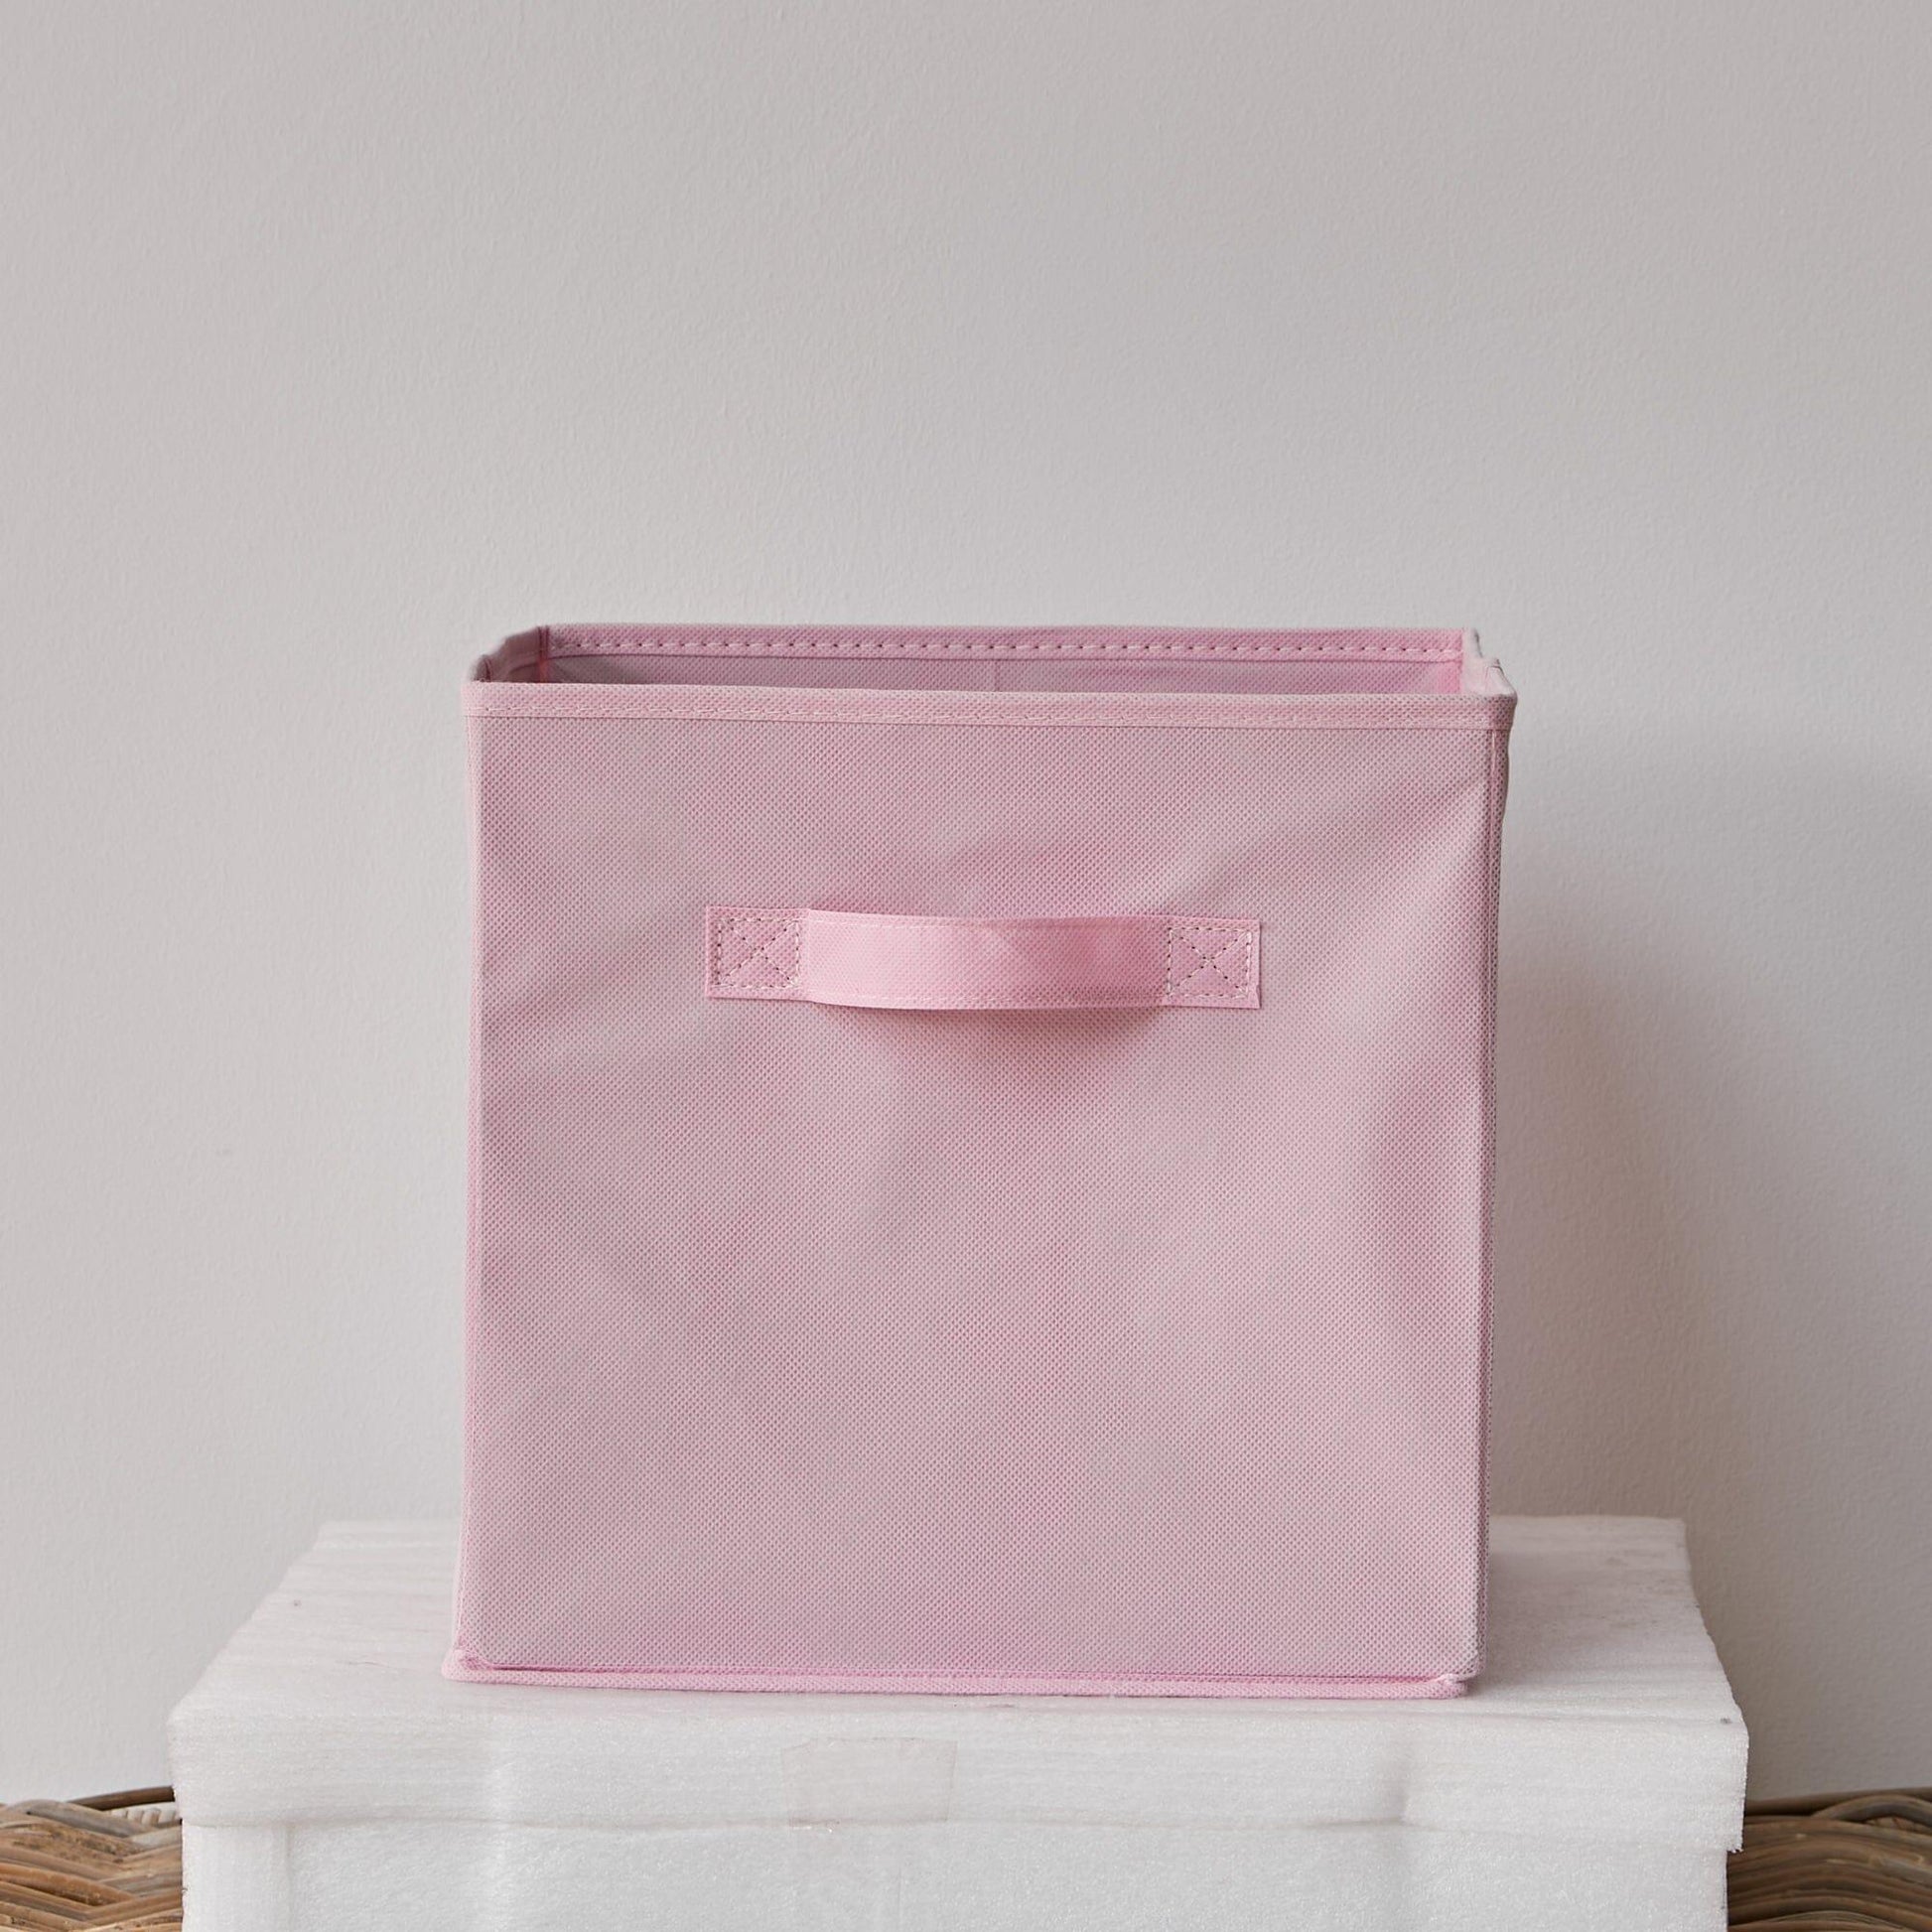 Cara fabric cube storage box - large - pink - Laura James